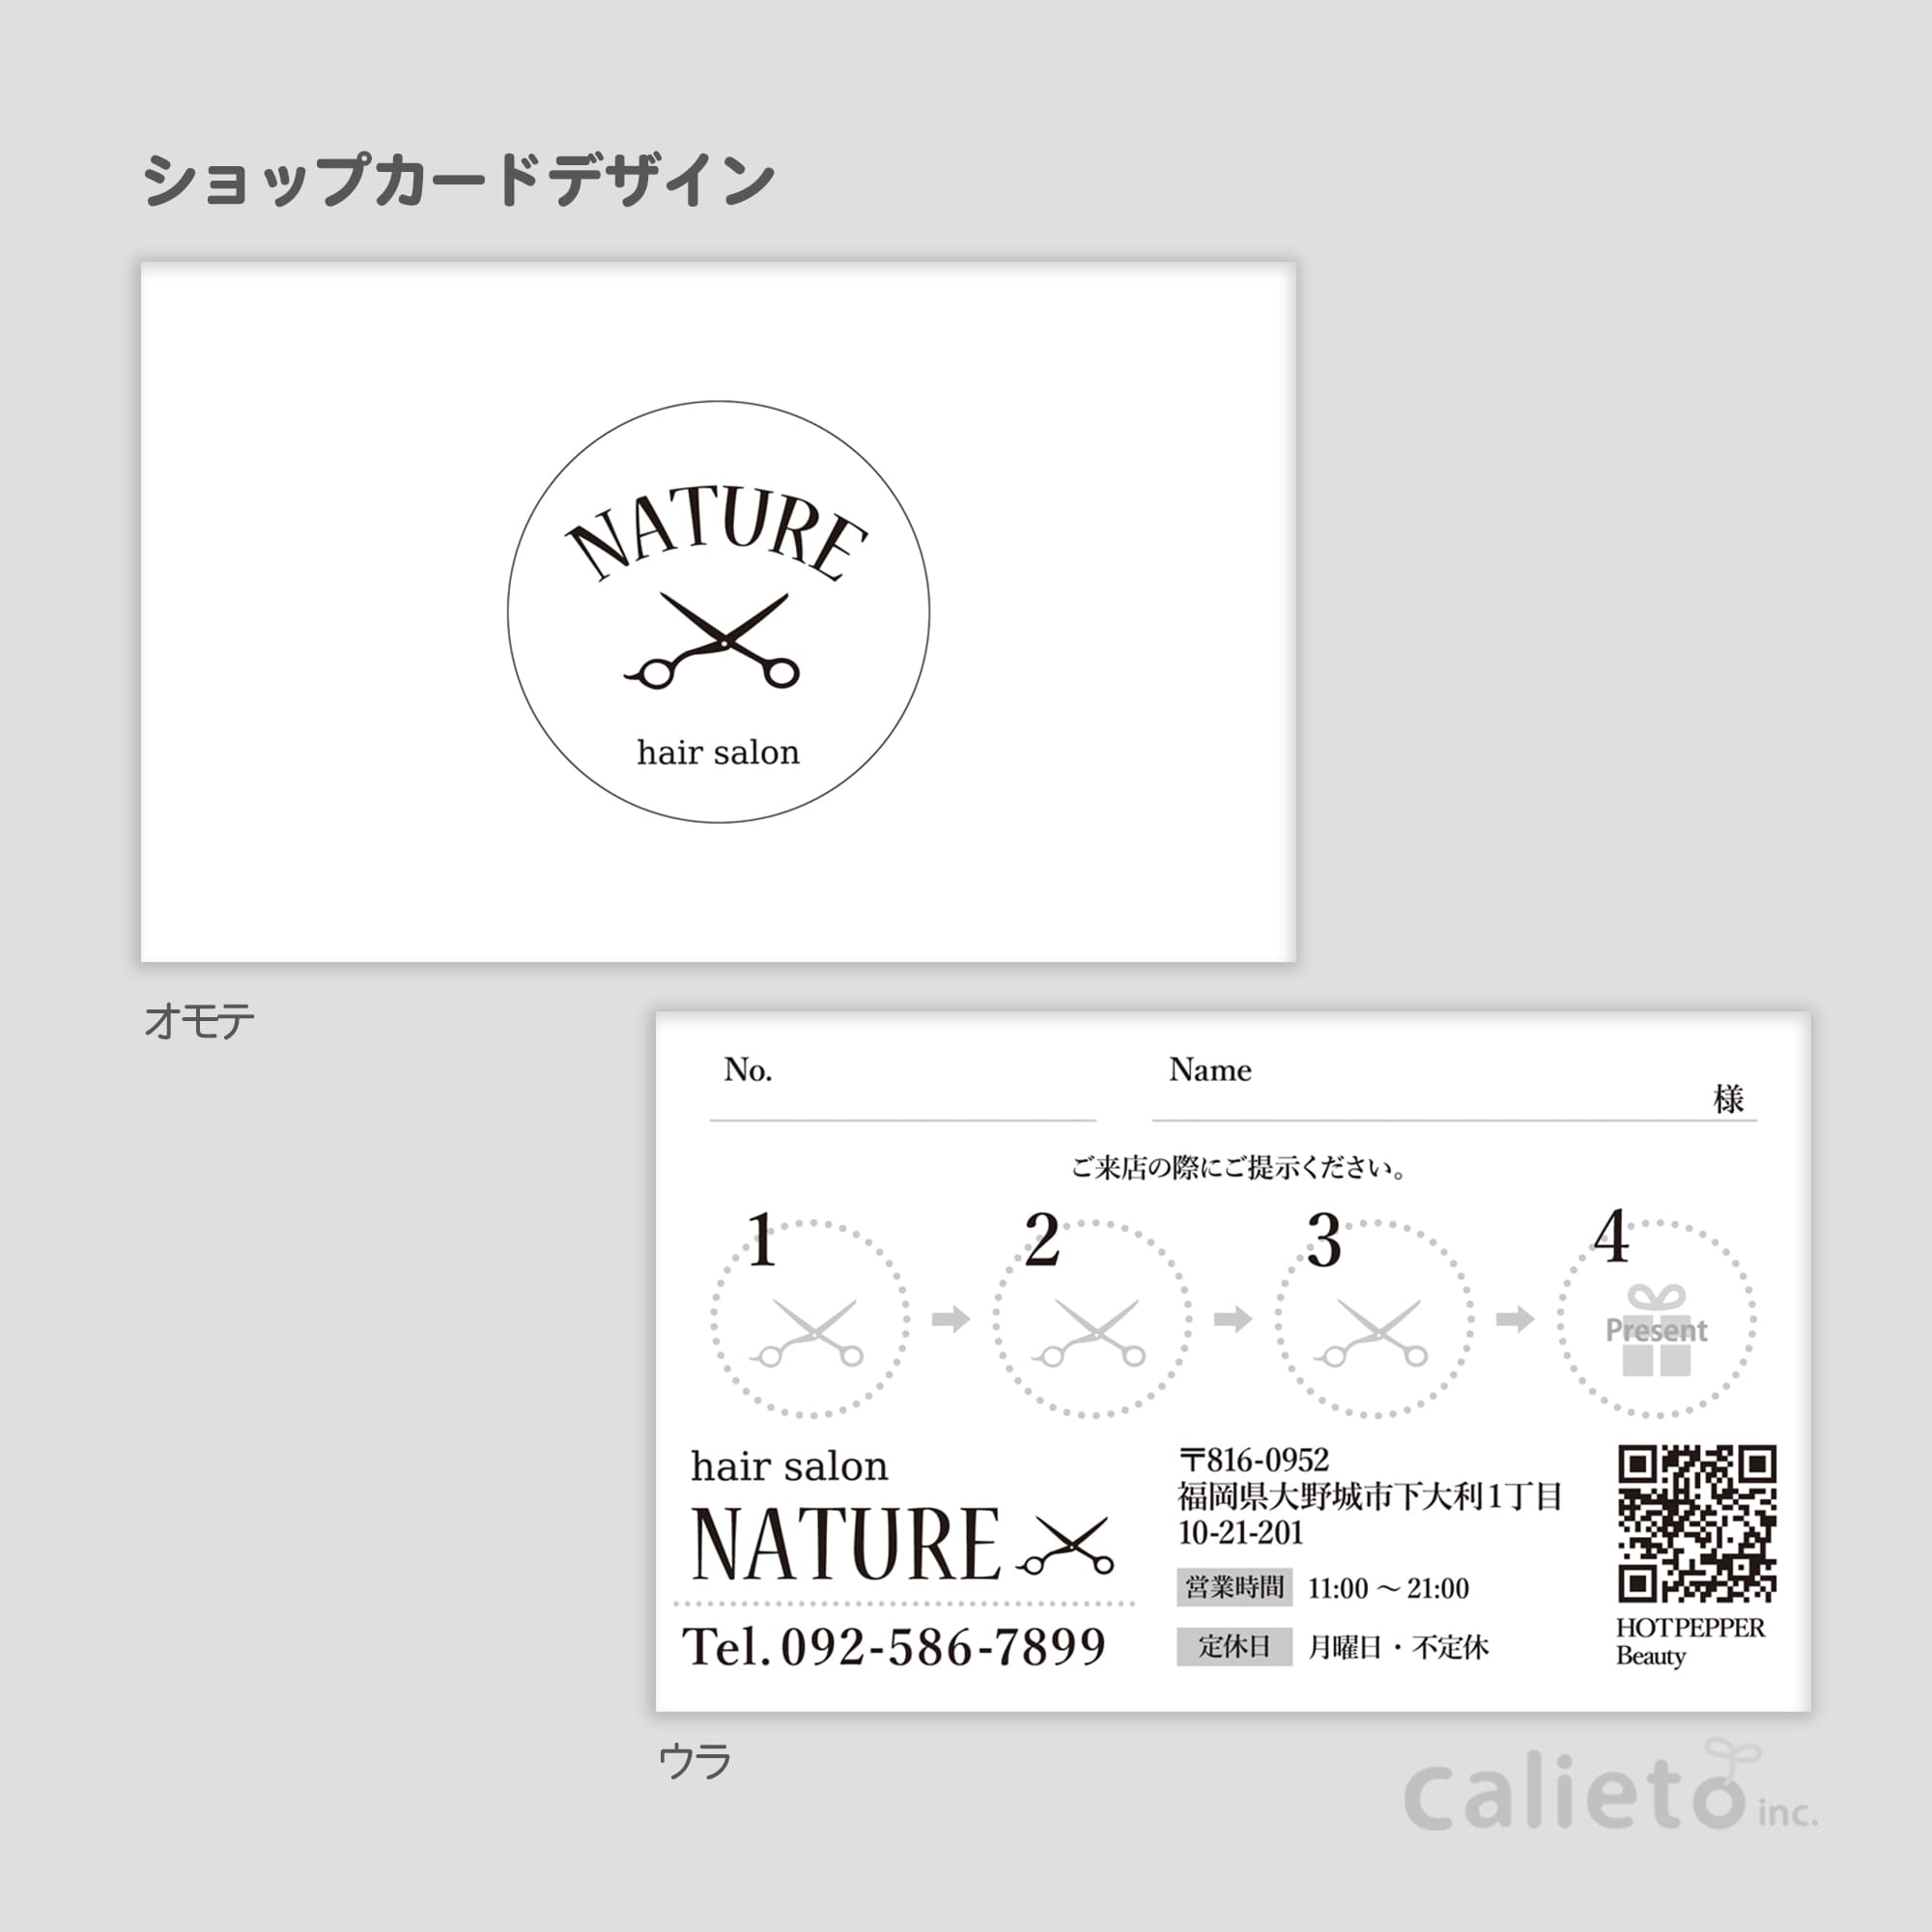 NATUREさま-ショップカードデザイン